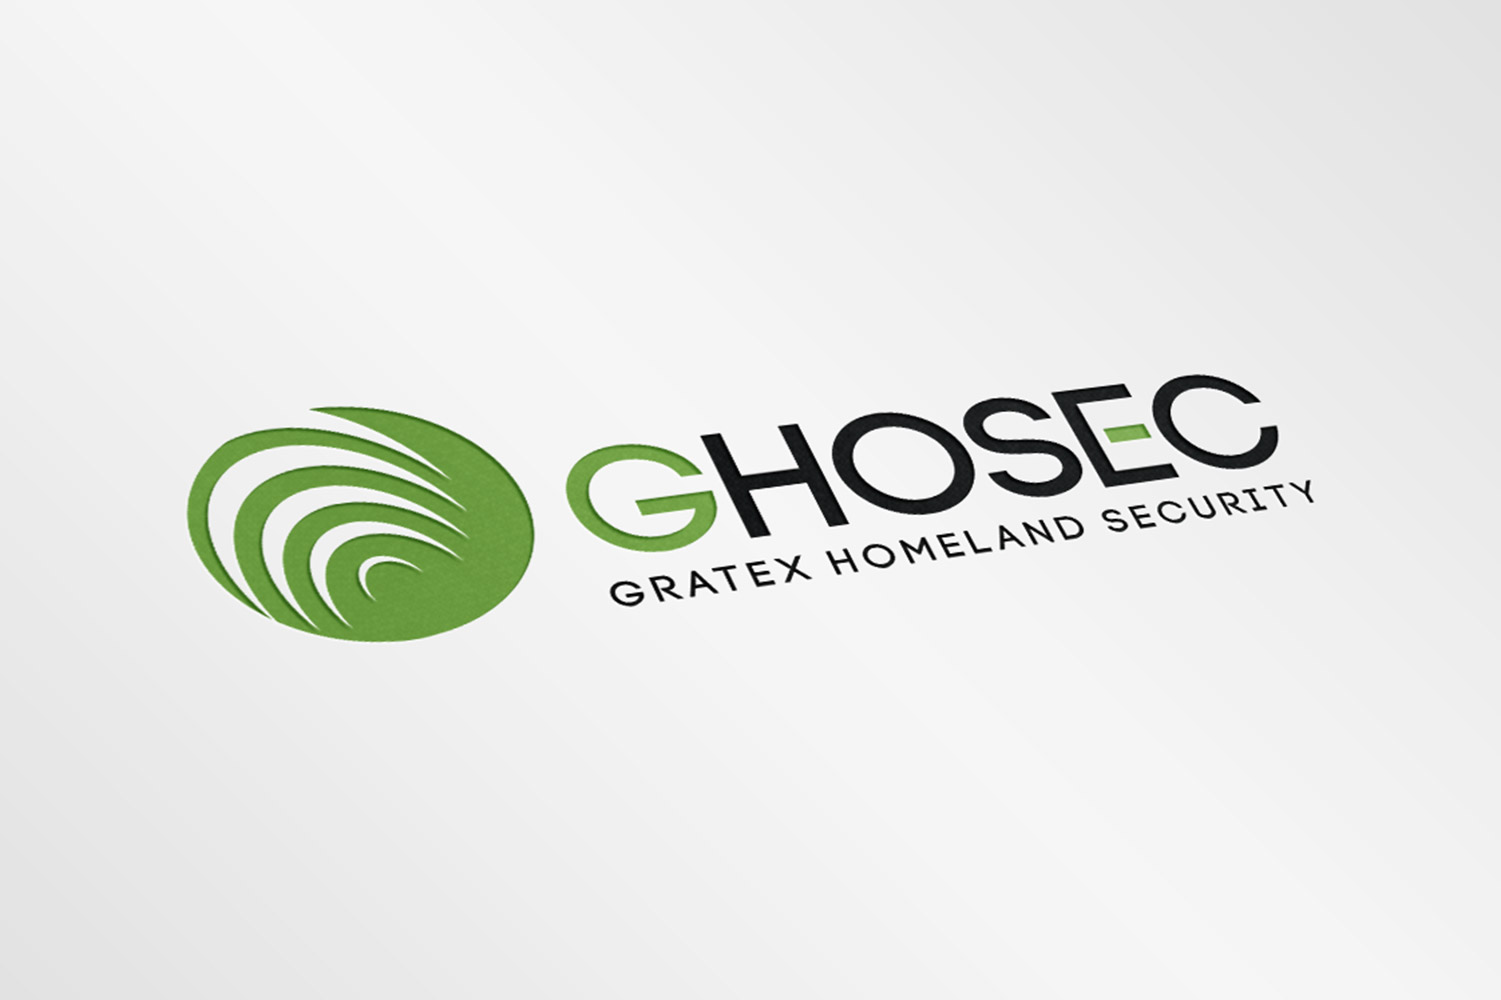 Ghosec, logo design image